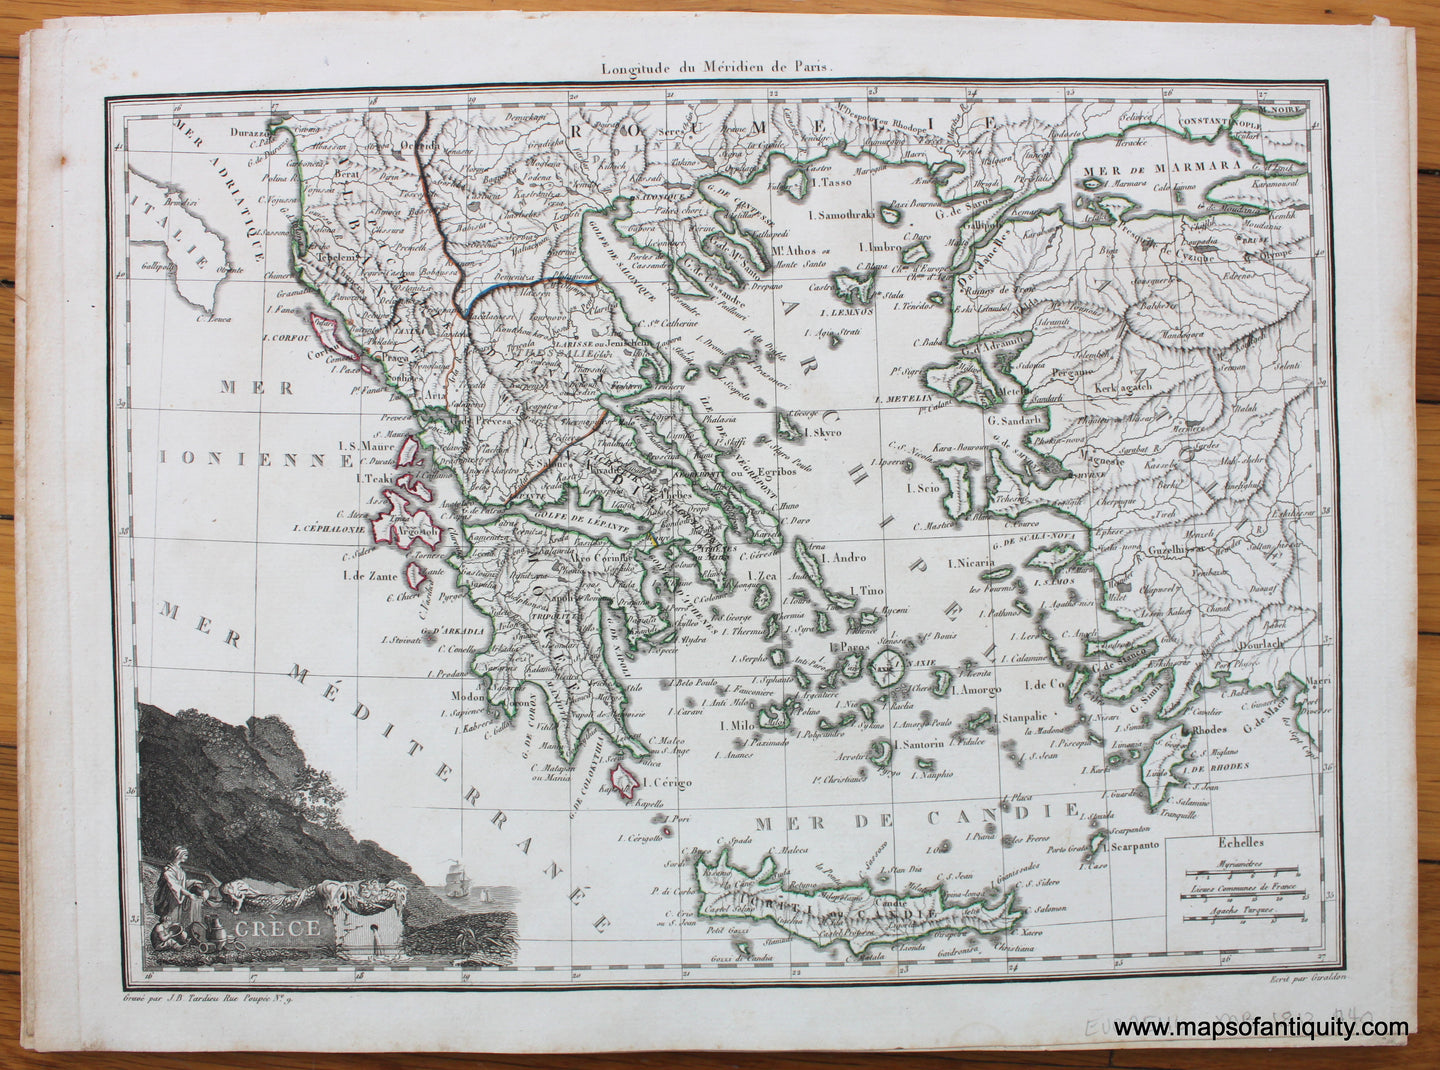 Antique-Hand-Colored-Map-Grece-Greece-1812-Malte-Brun-Lapie-Greece-1800s-19th-century-Maps-of-Antiquity